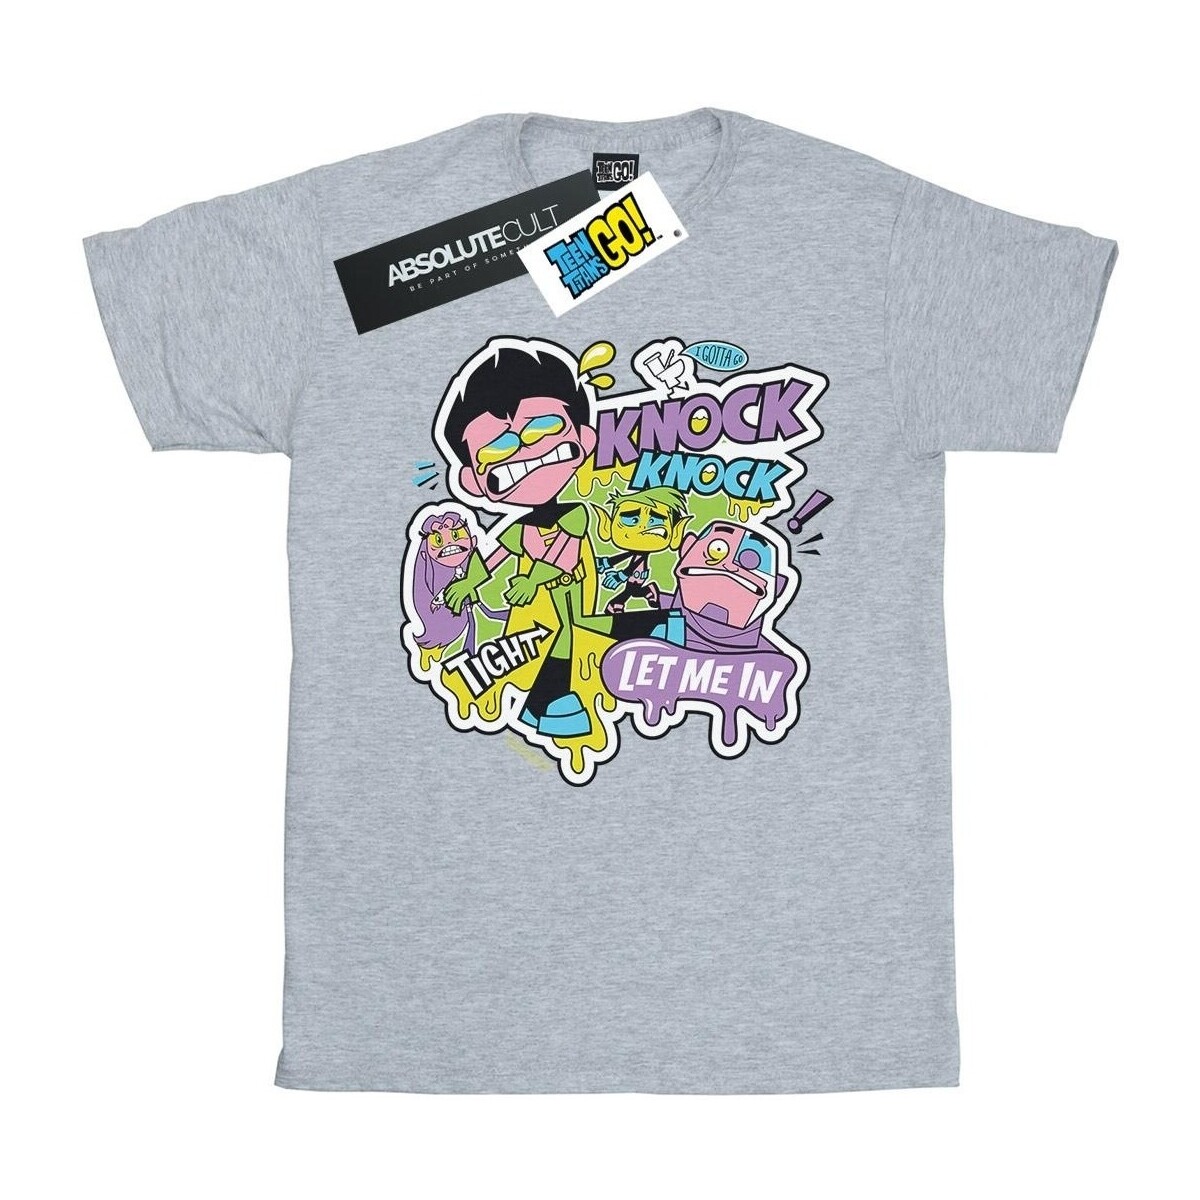 textil Niño Camisetas manga corta Dc Comics Teen Titans Go Knock Knock Gris